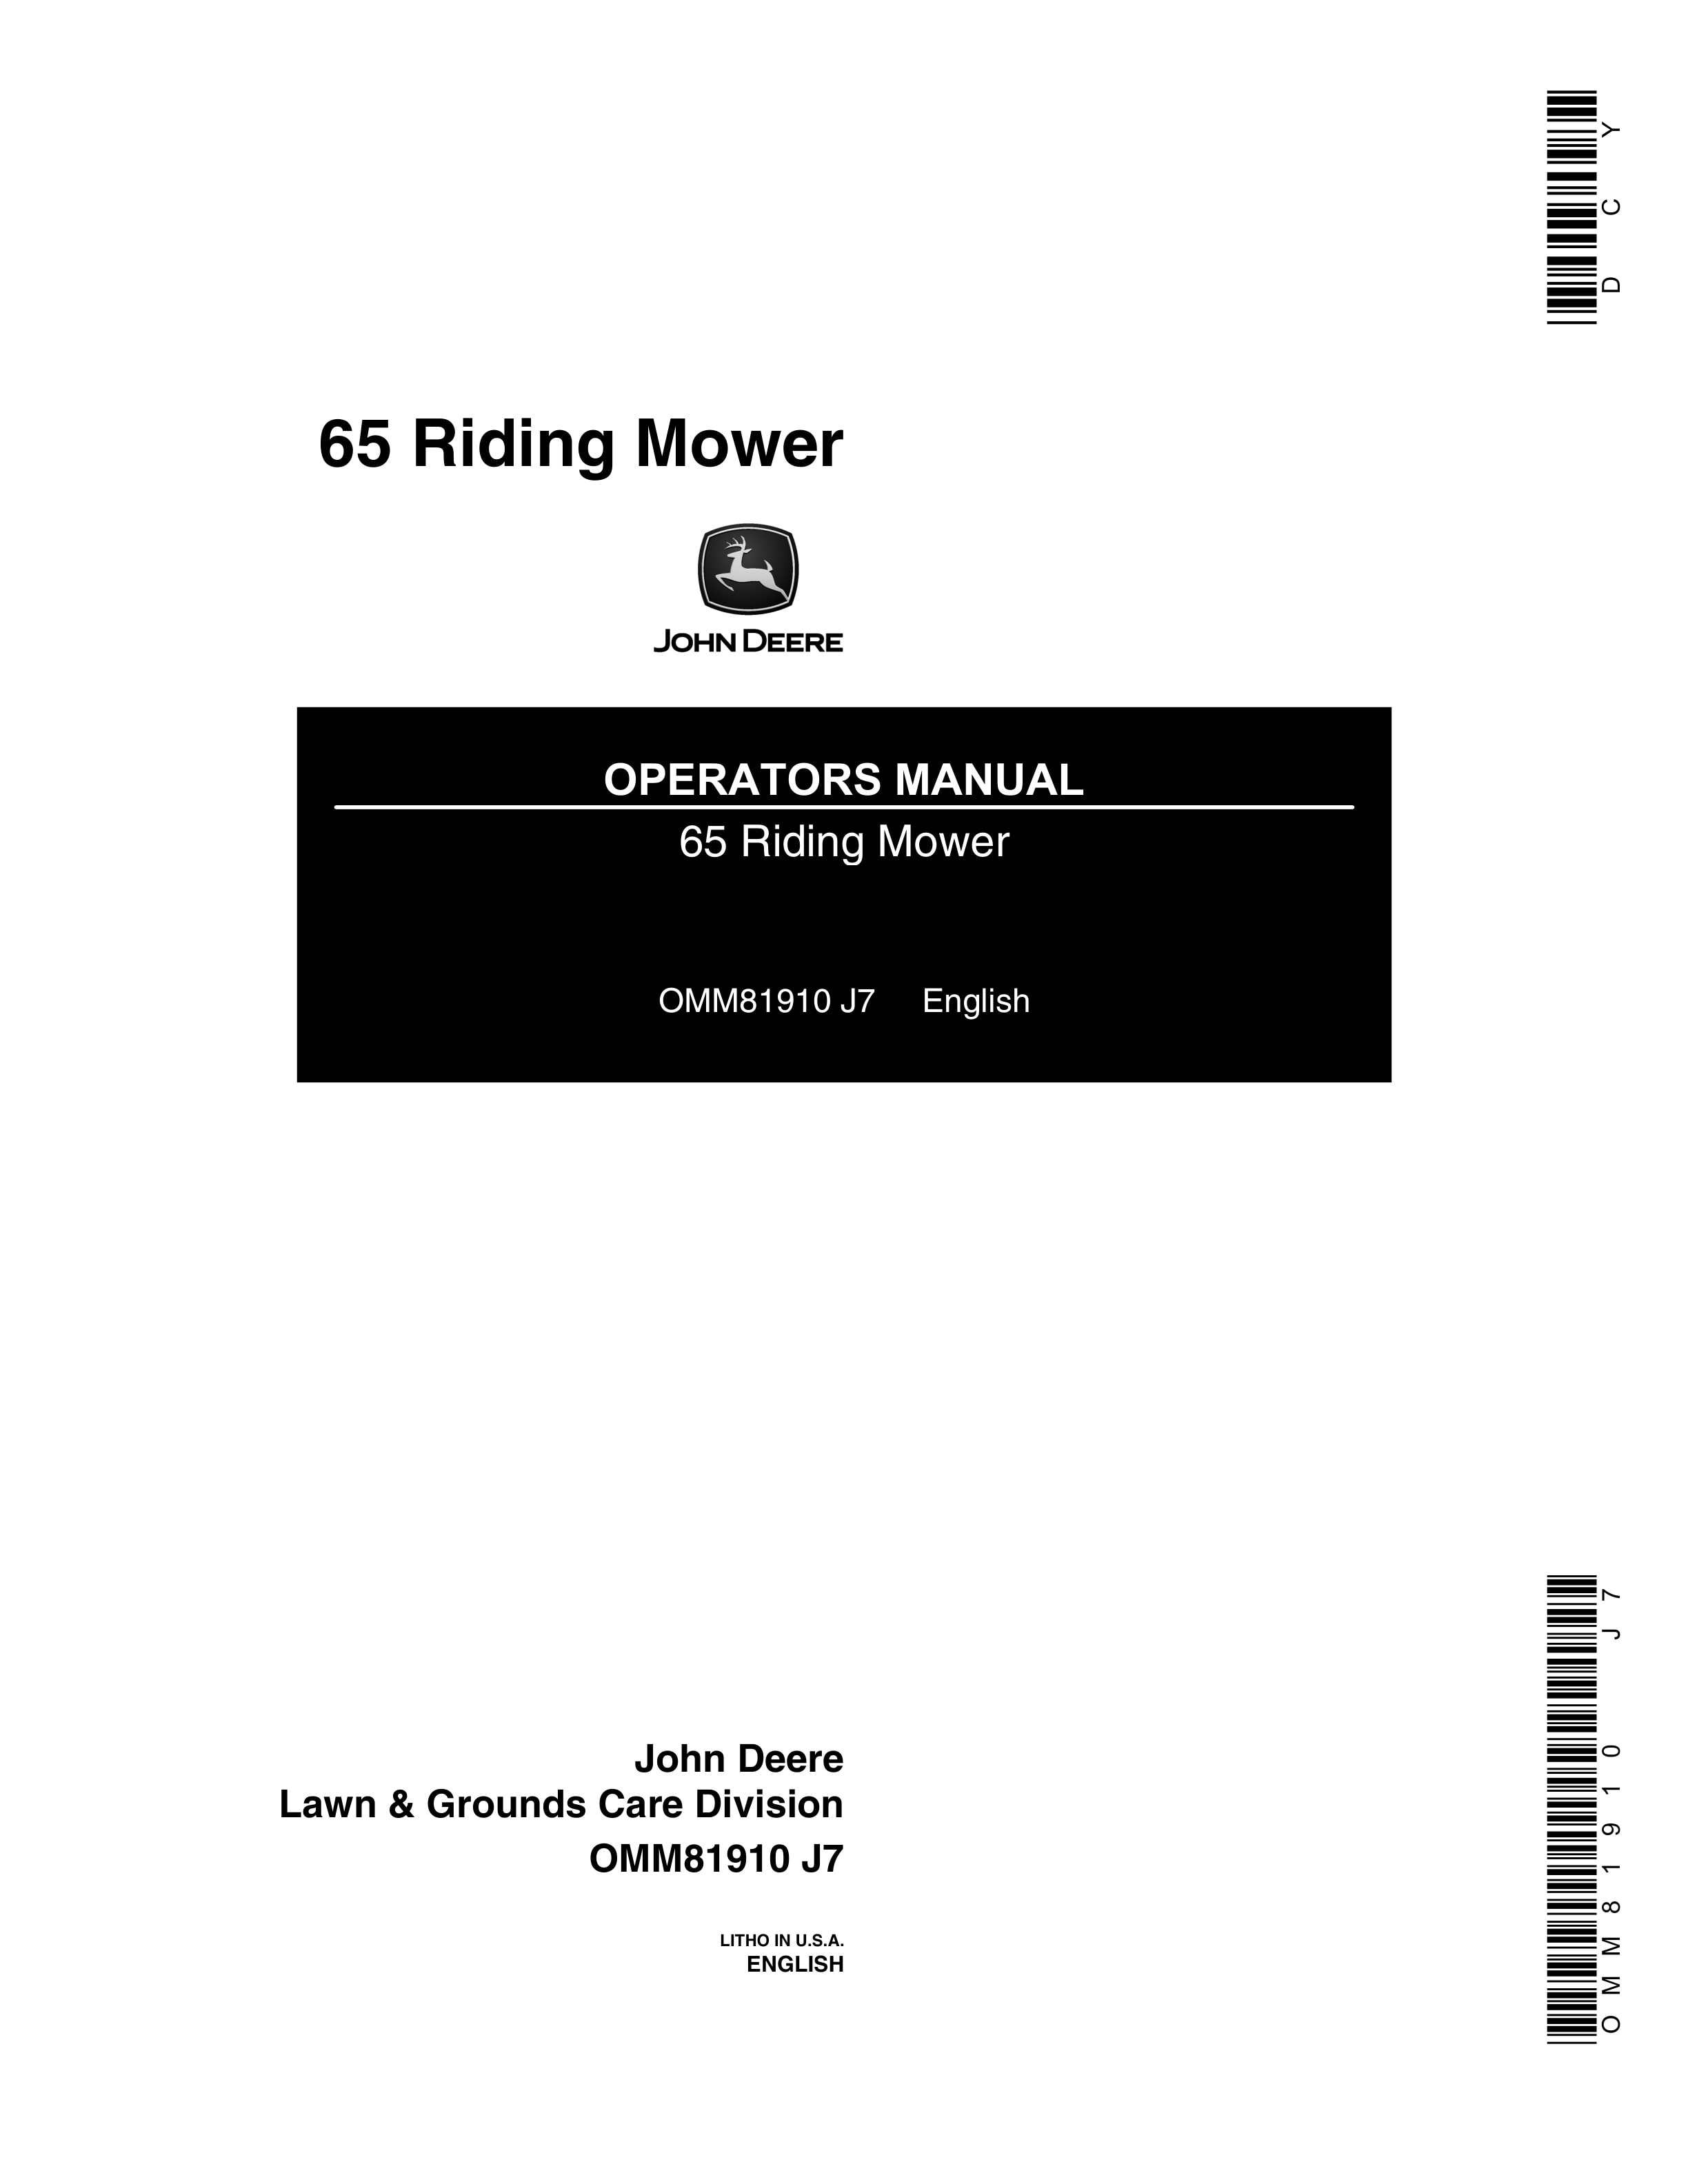 John Deere 65 Riding Mower Operator Manual OMM81910-1